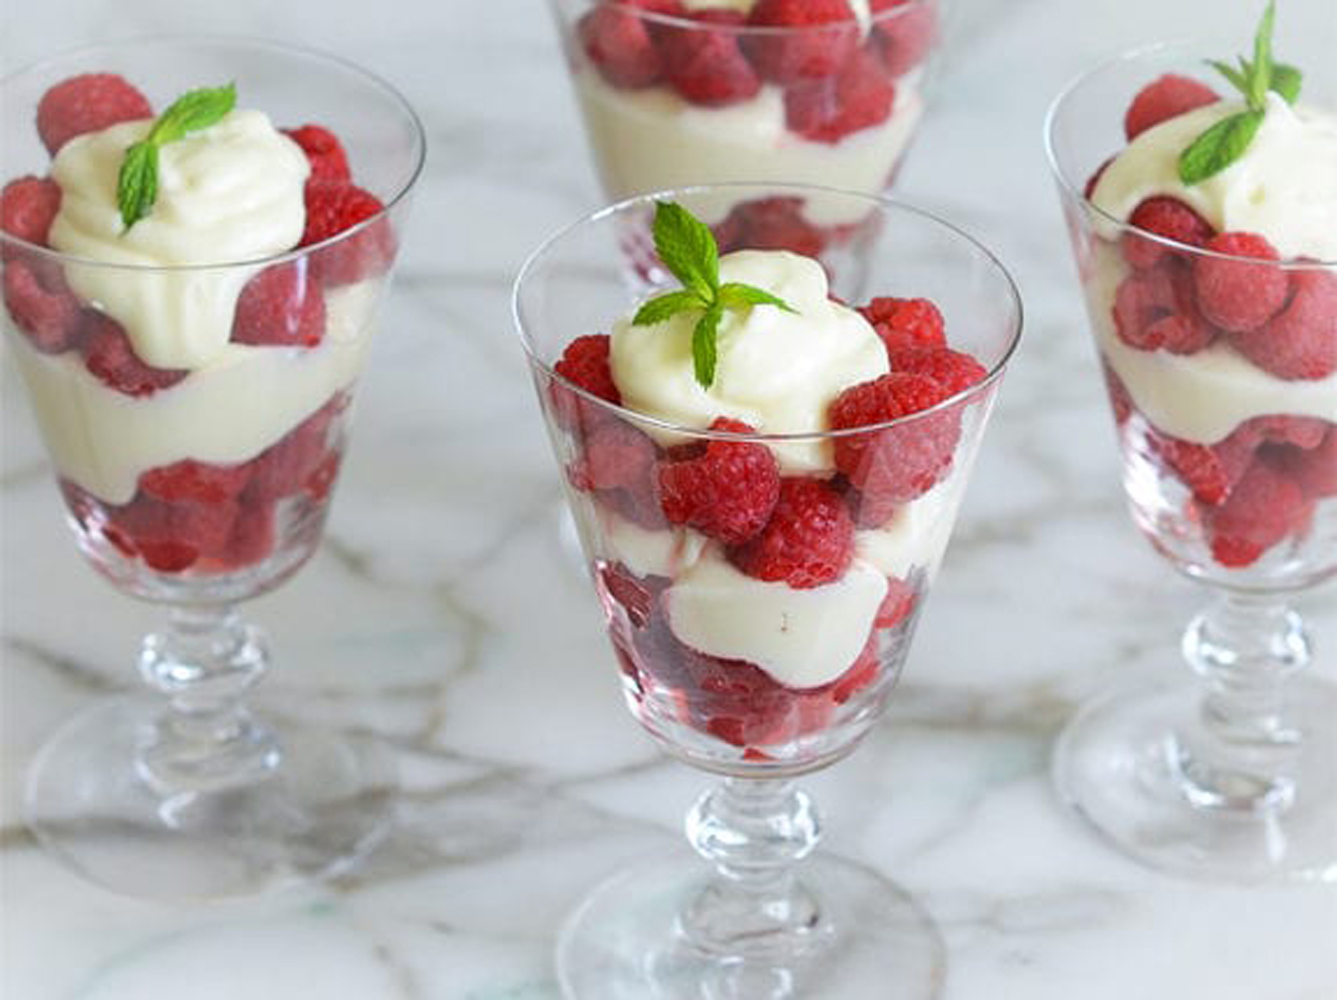 Strawberry Shortcake Parfait